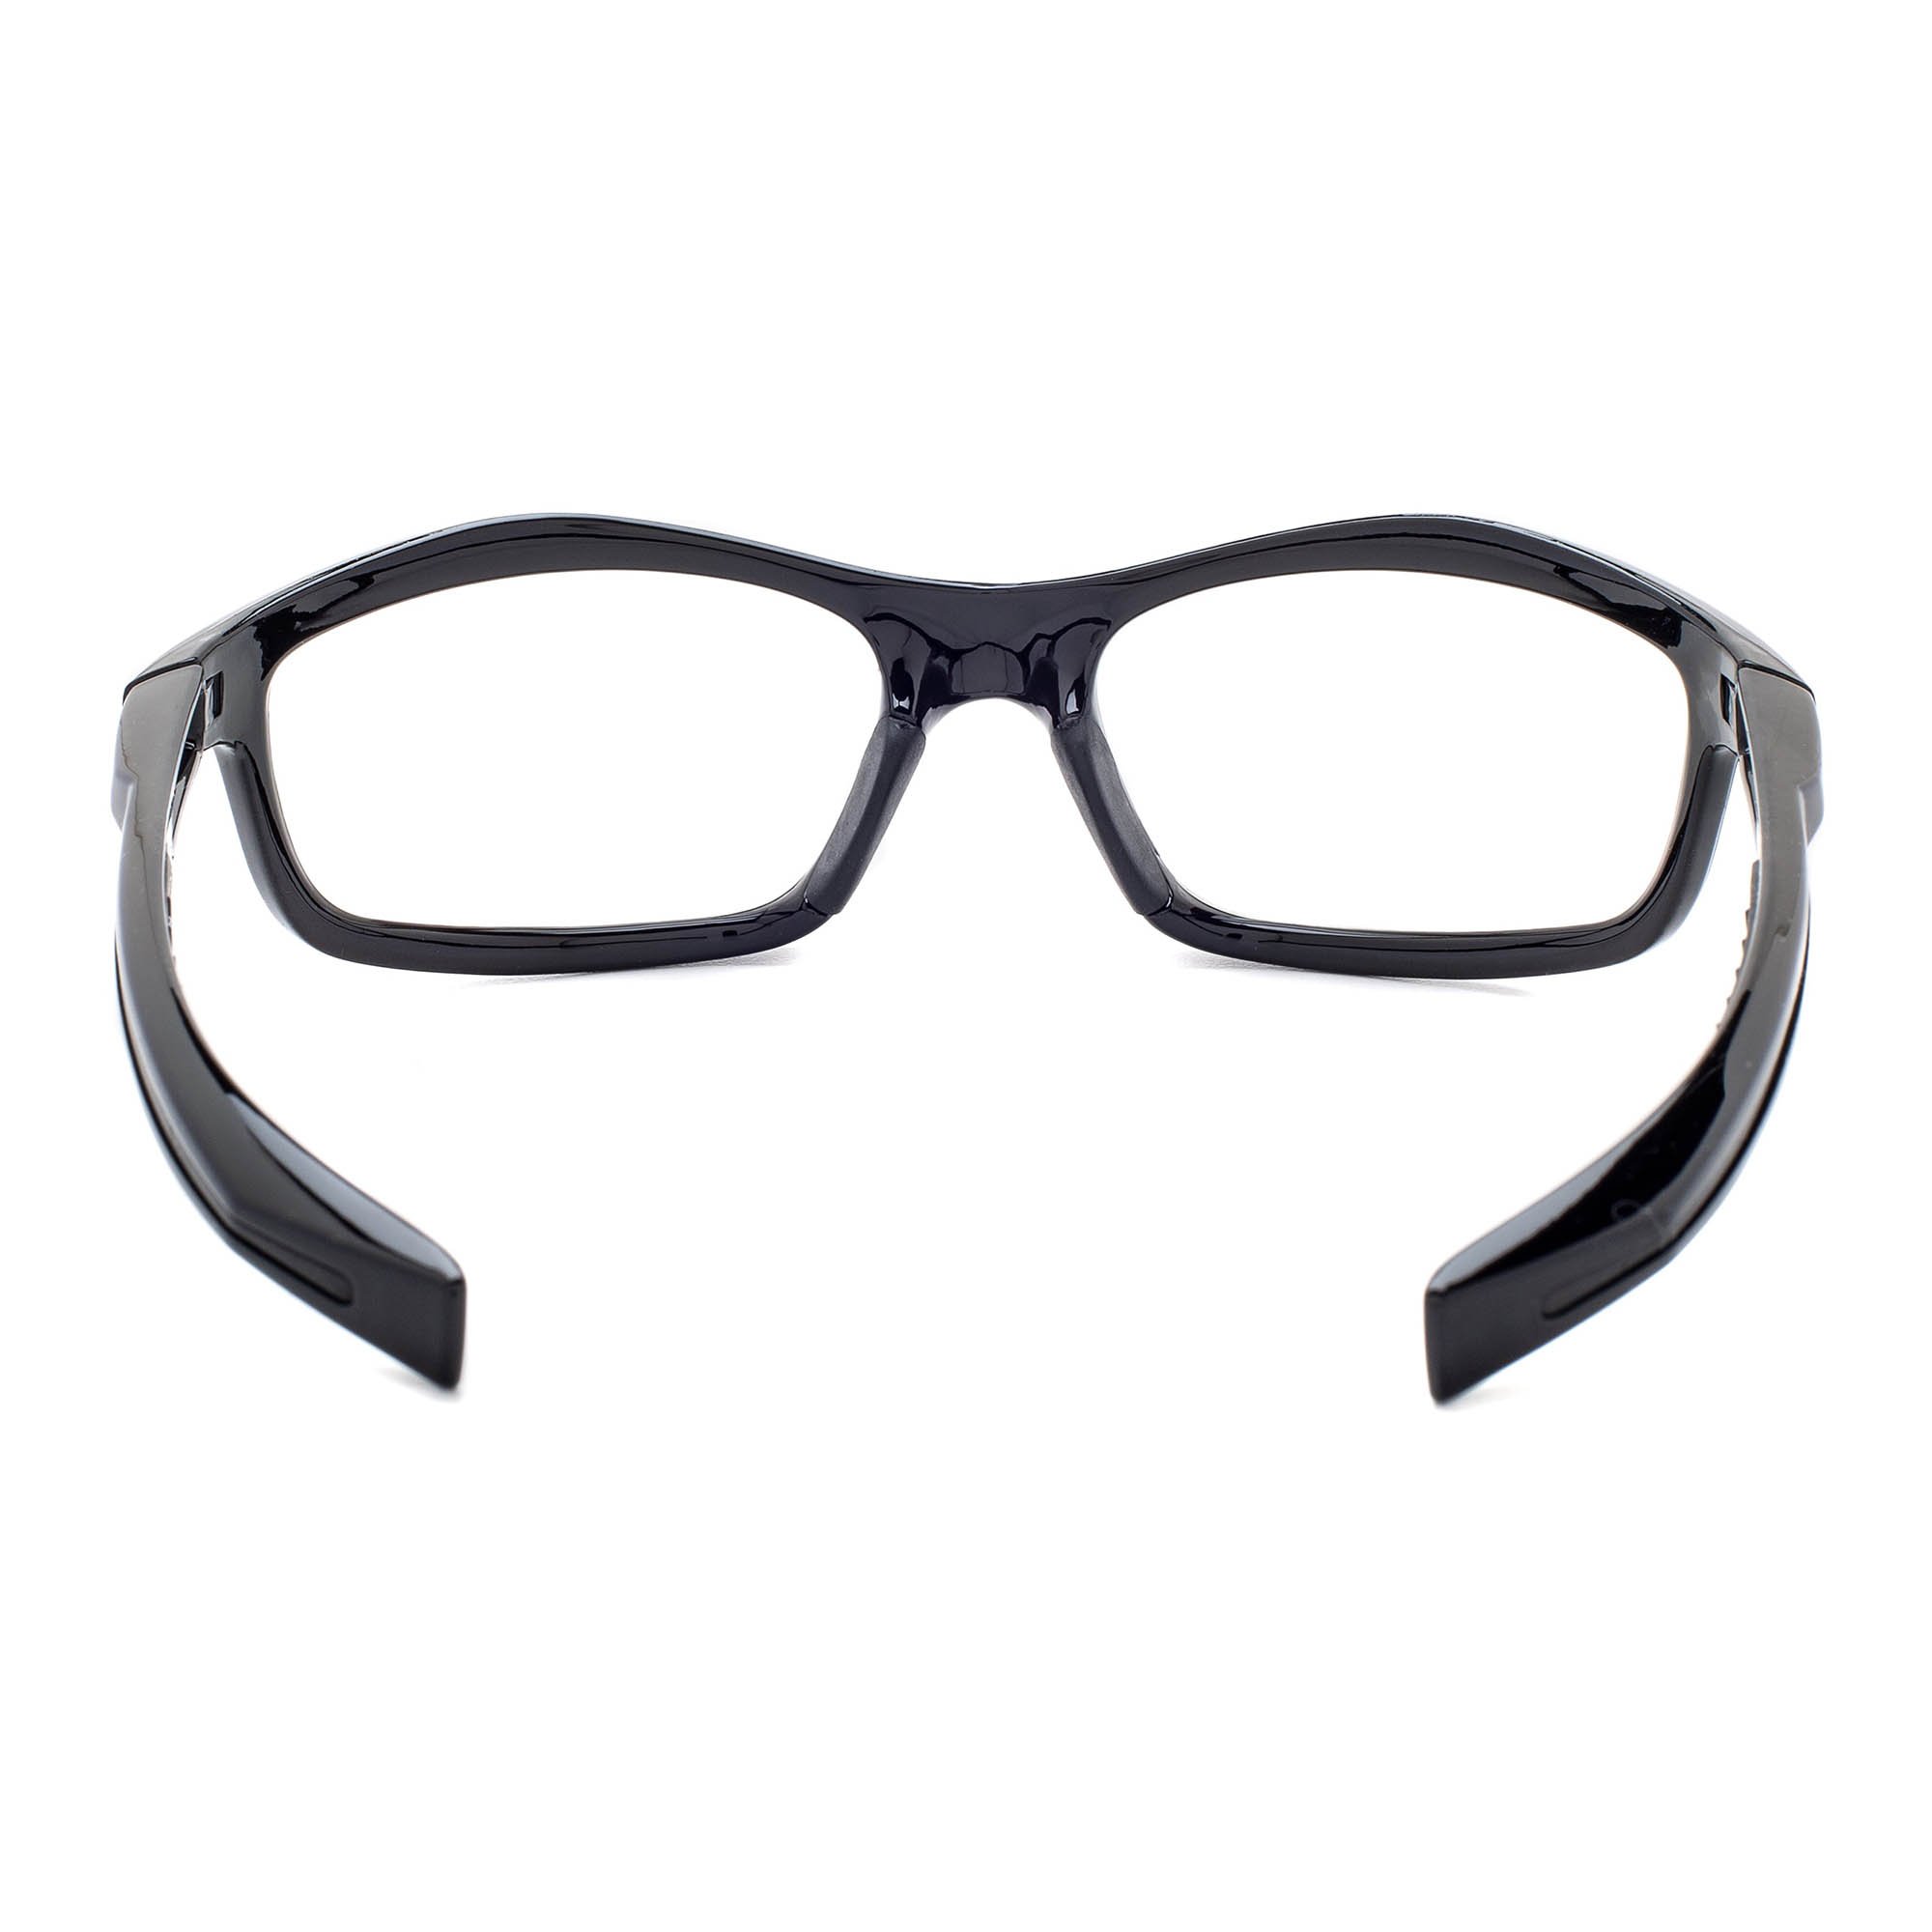 Leaded Glasses Radiation Safety Eyewear Model Psr-500